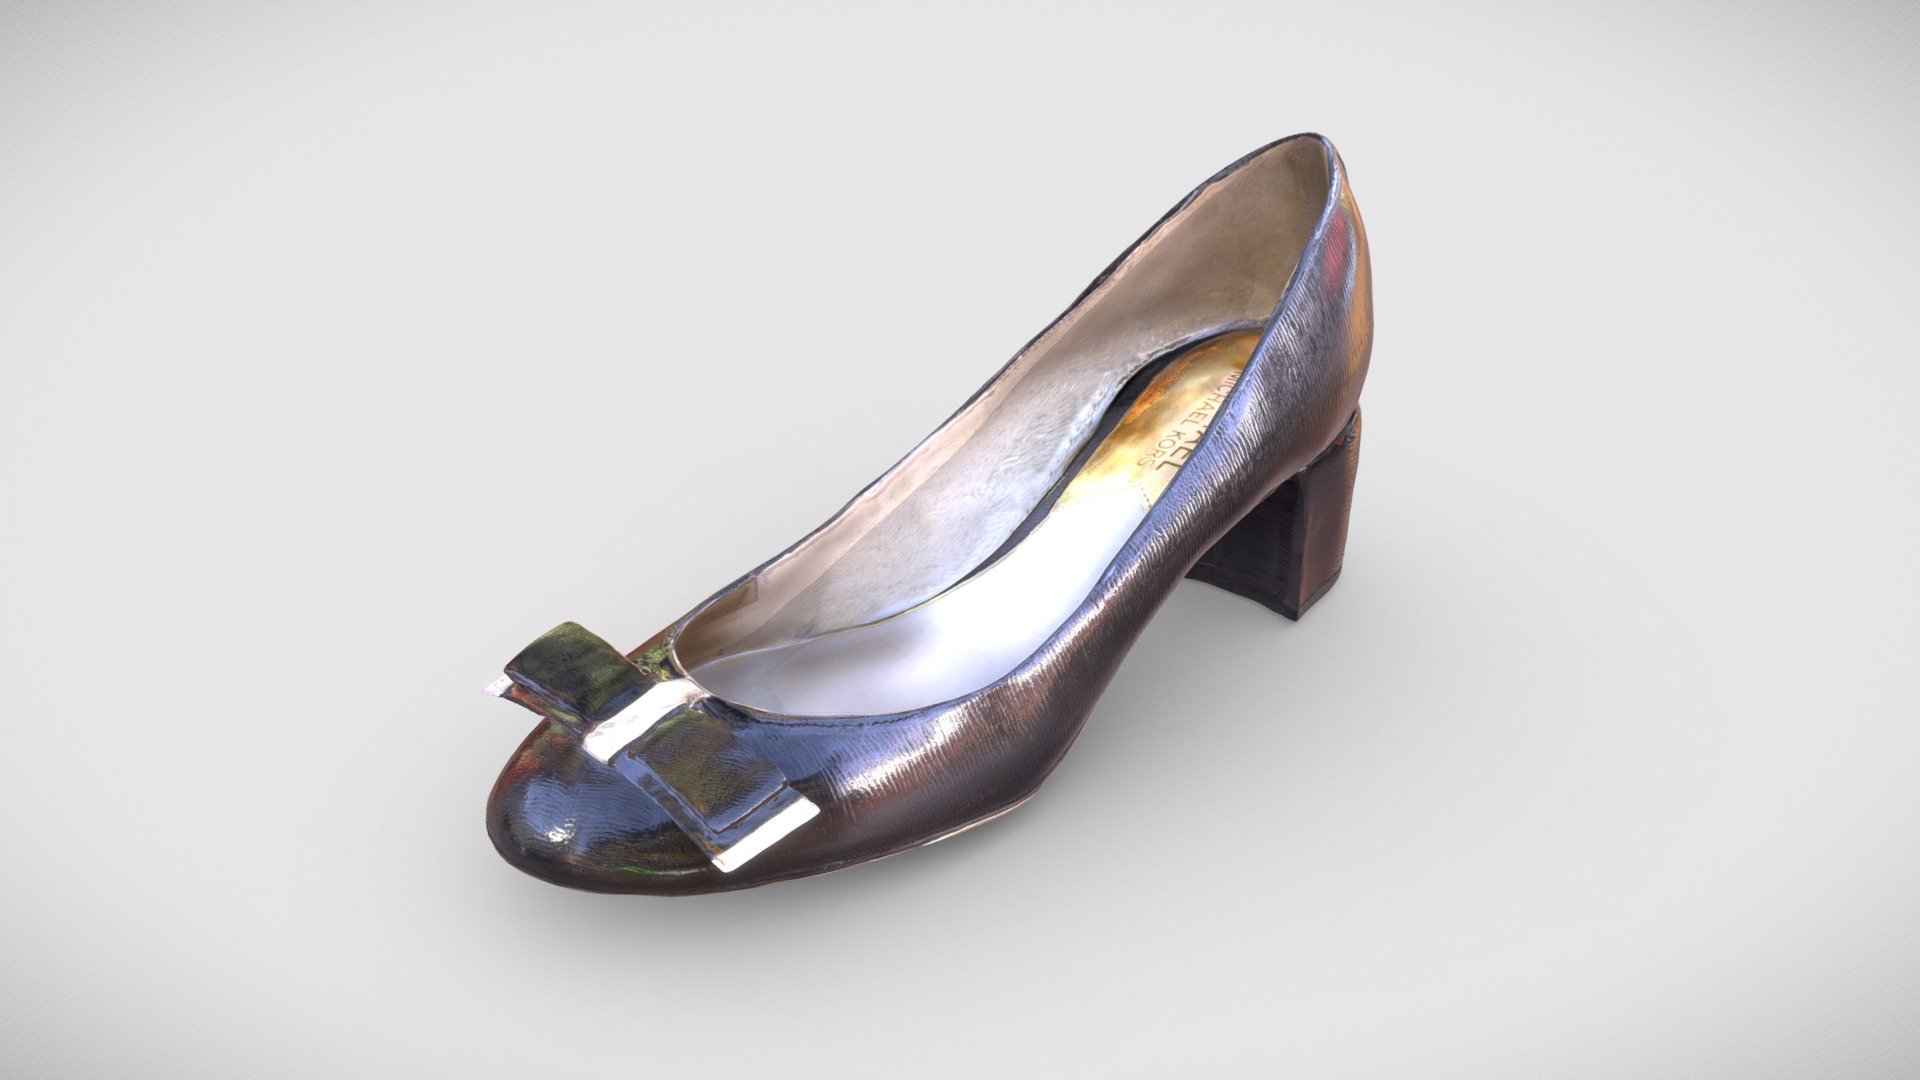 Michael Kors Shoes 3D model